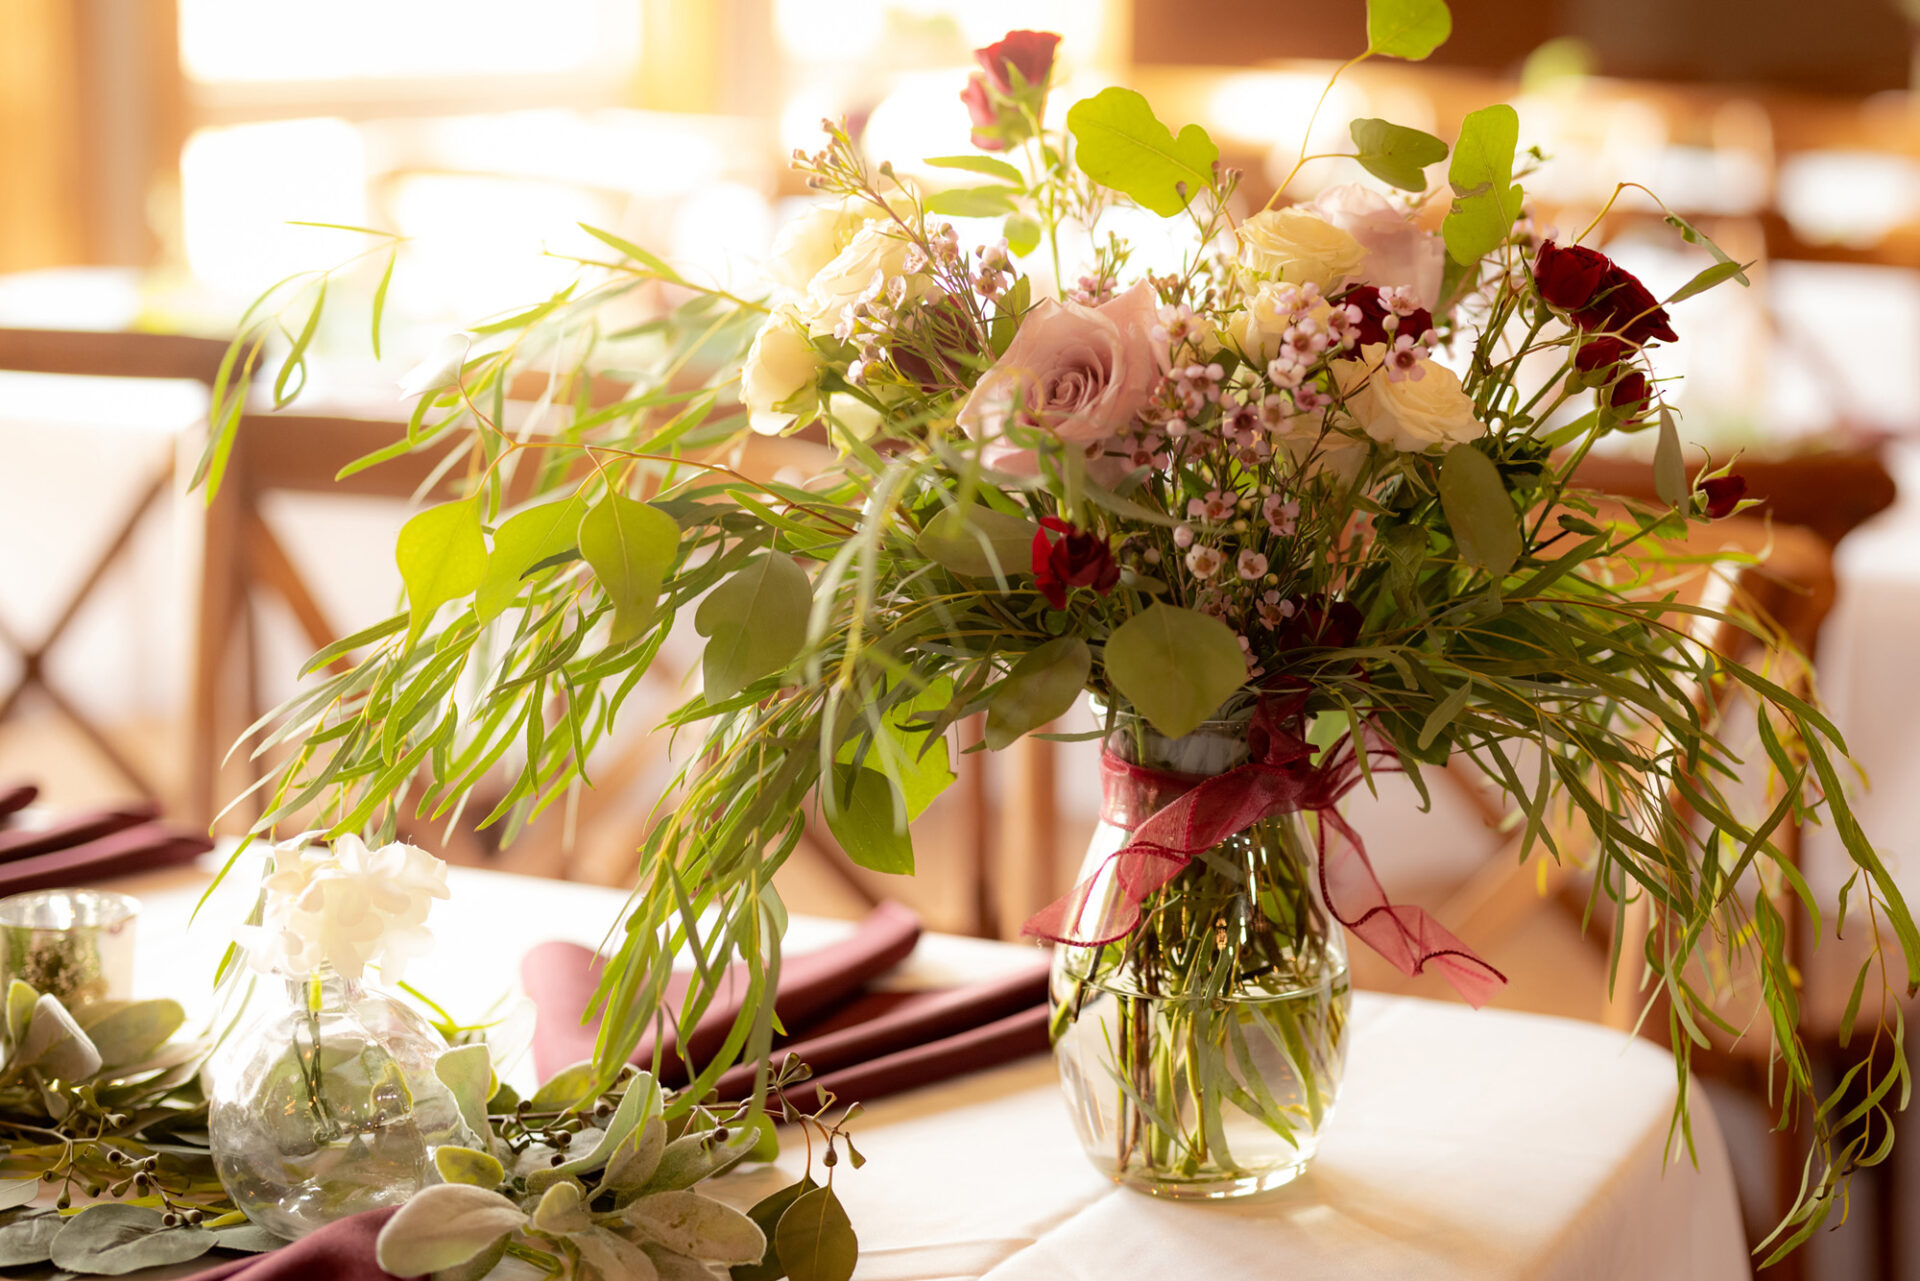 Flower arrangement on tables